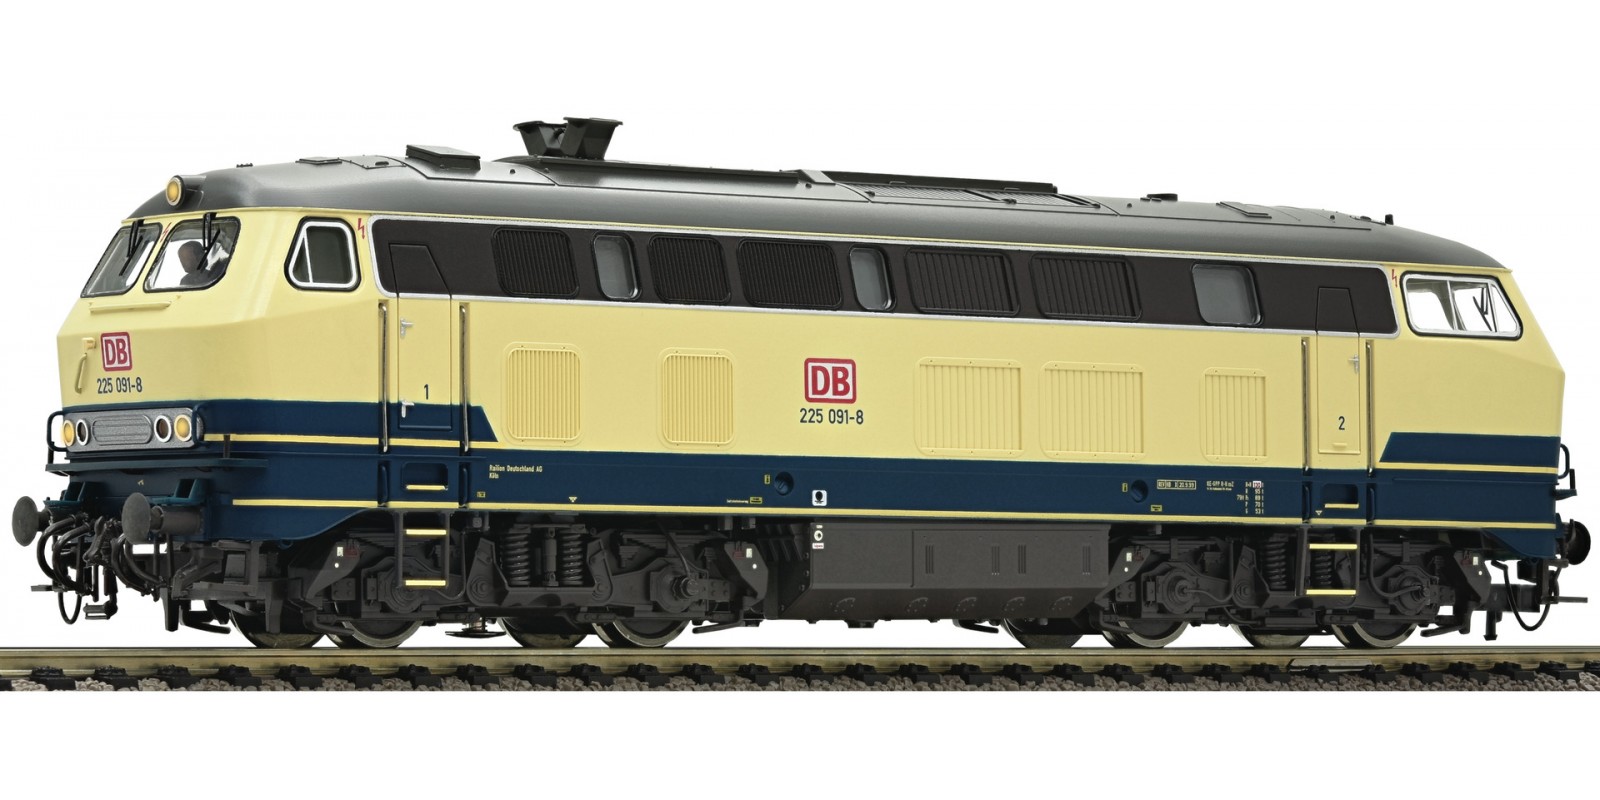 FL394074 - Diesel locomotive class 225, DB AG